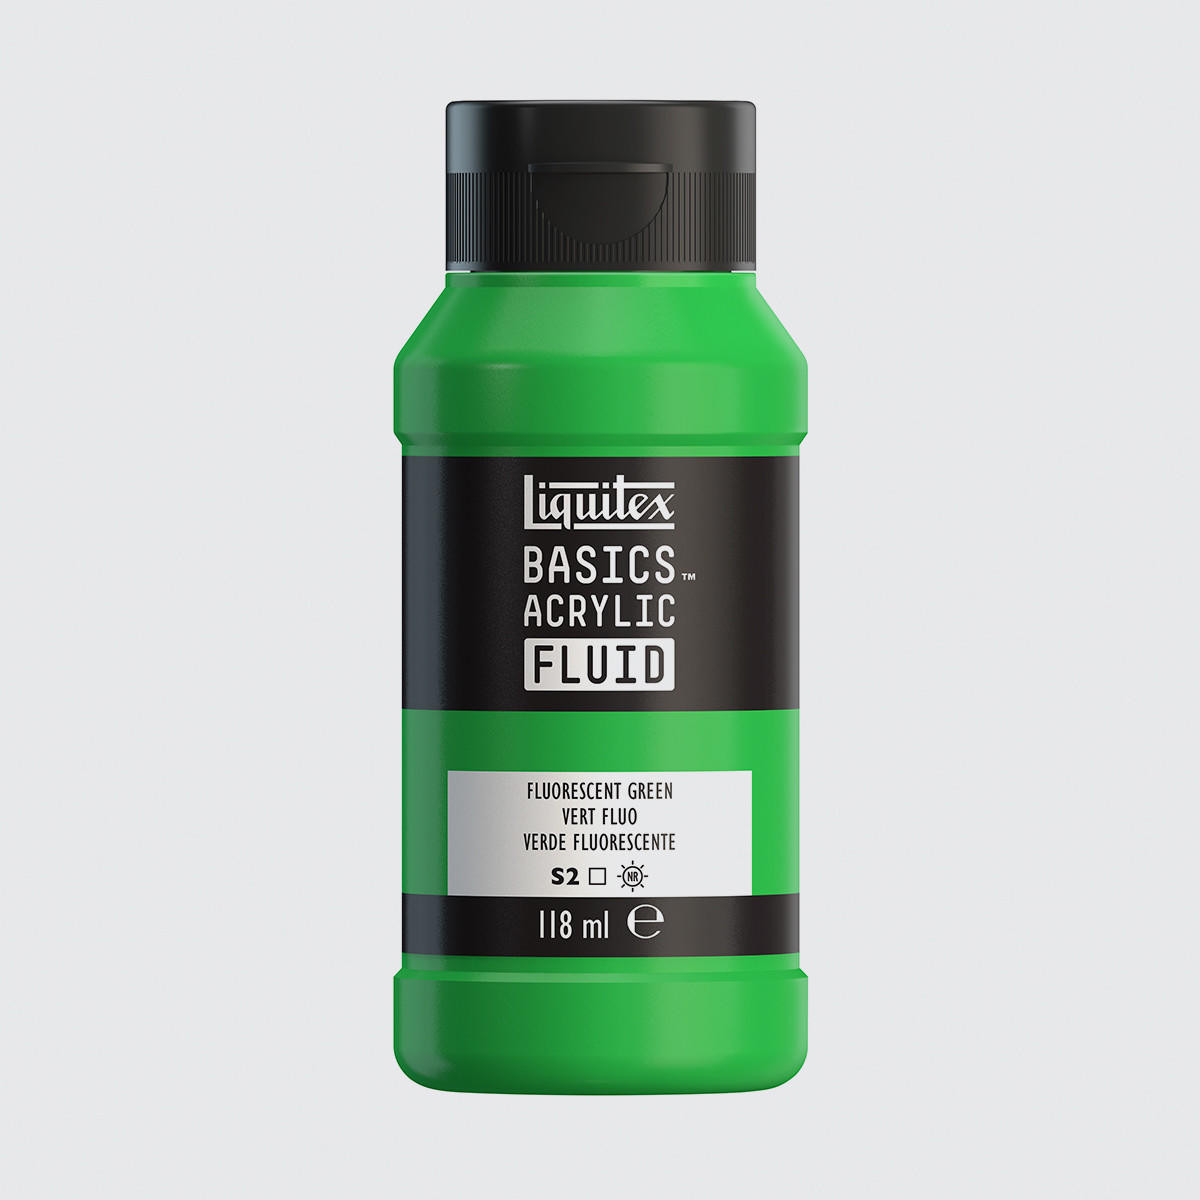 Liquitex Basics Acrylic Fluid 118ml Fluorescent Green